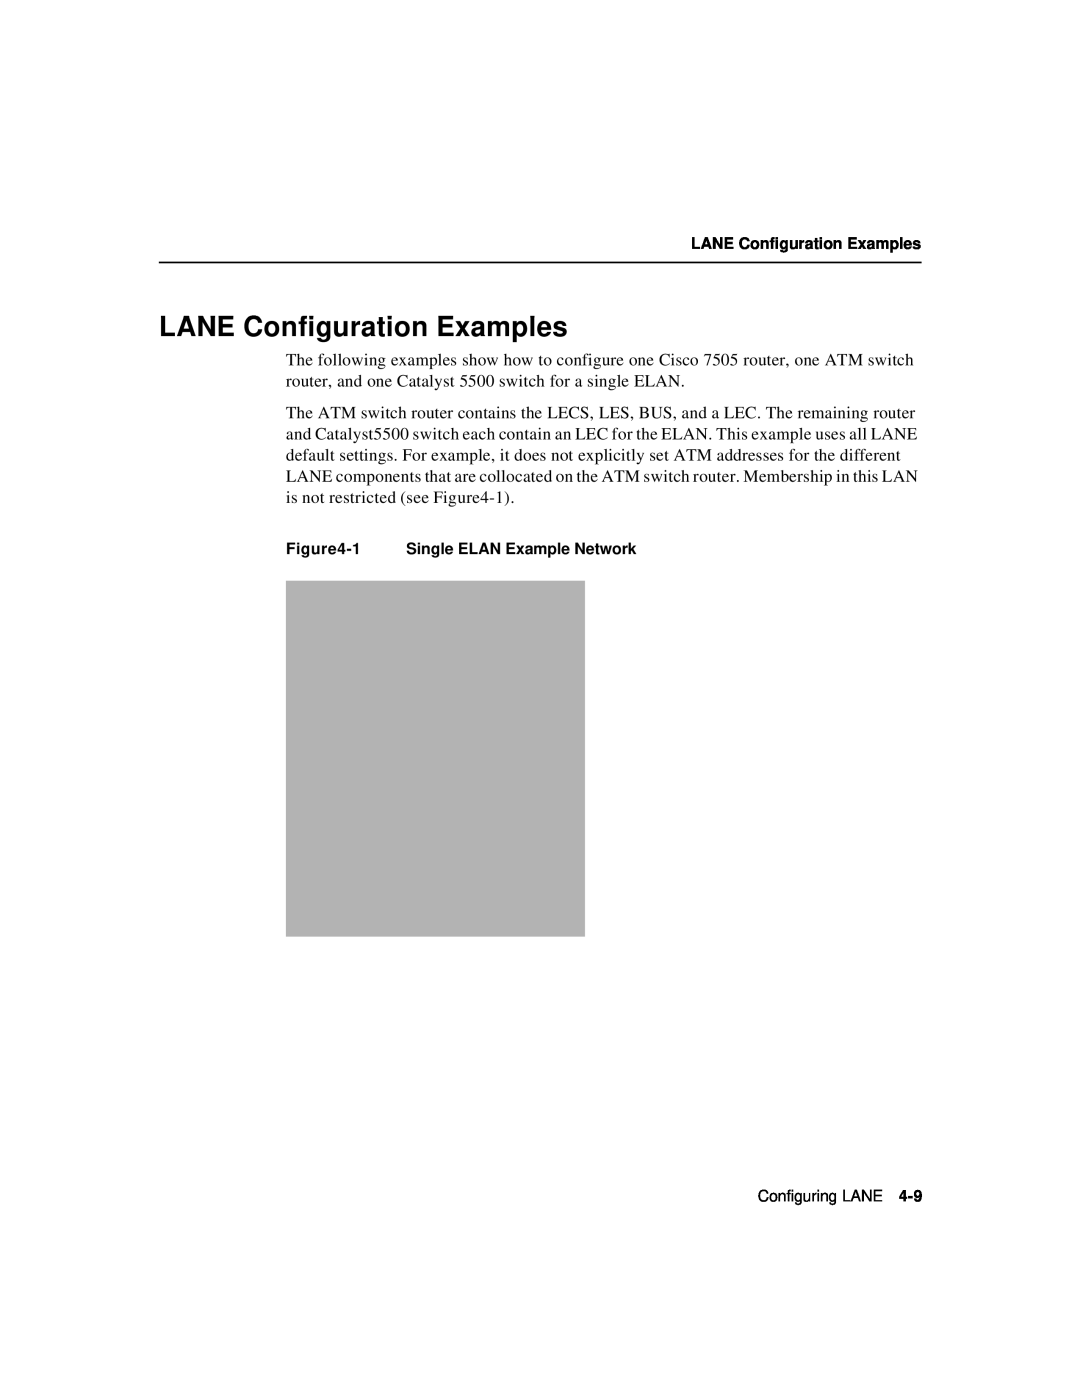 Cisco Systems 78-6897-01 manual LANE Configuration Examples, 1 Single ELAN Example Network 